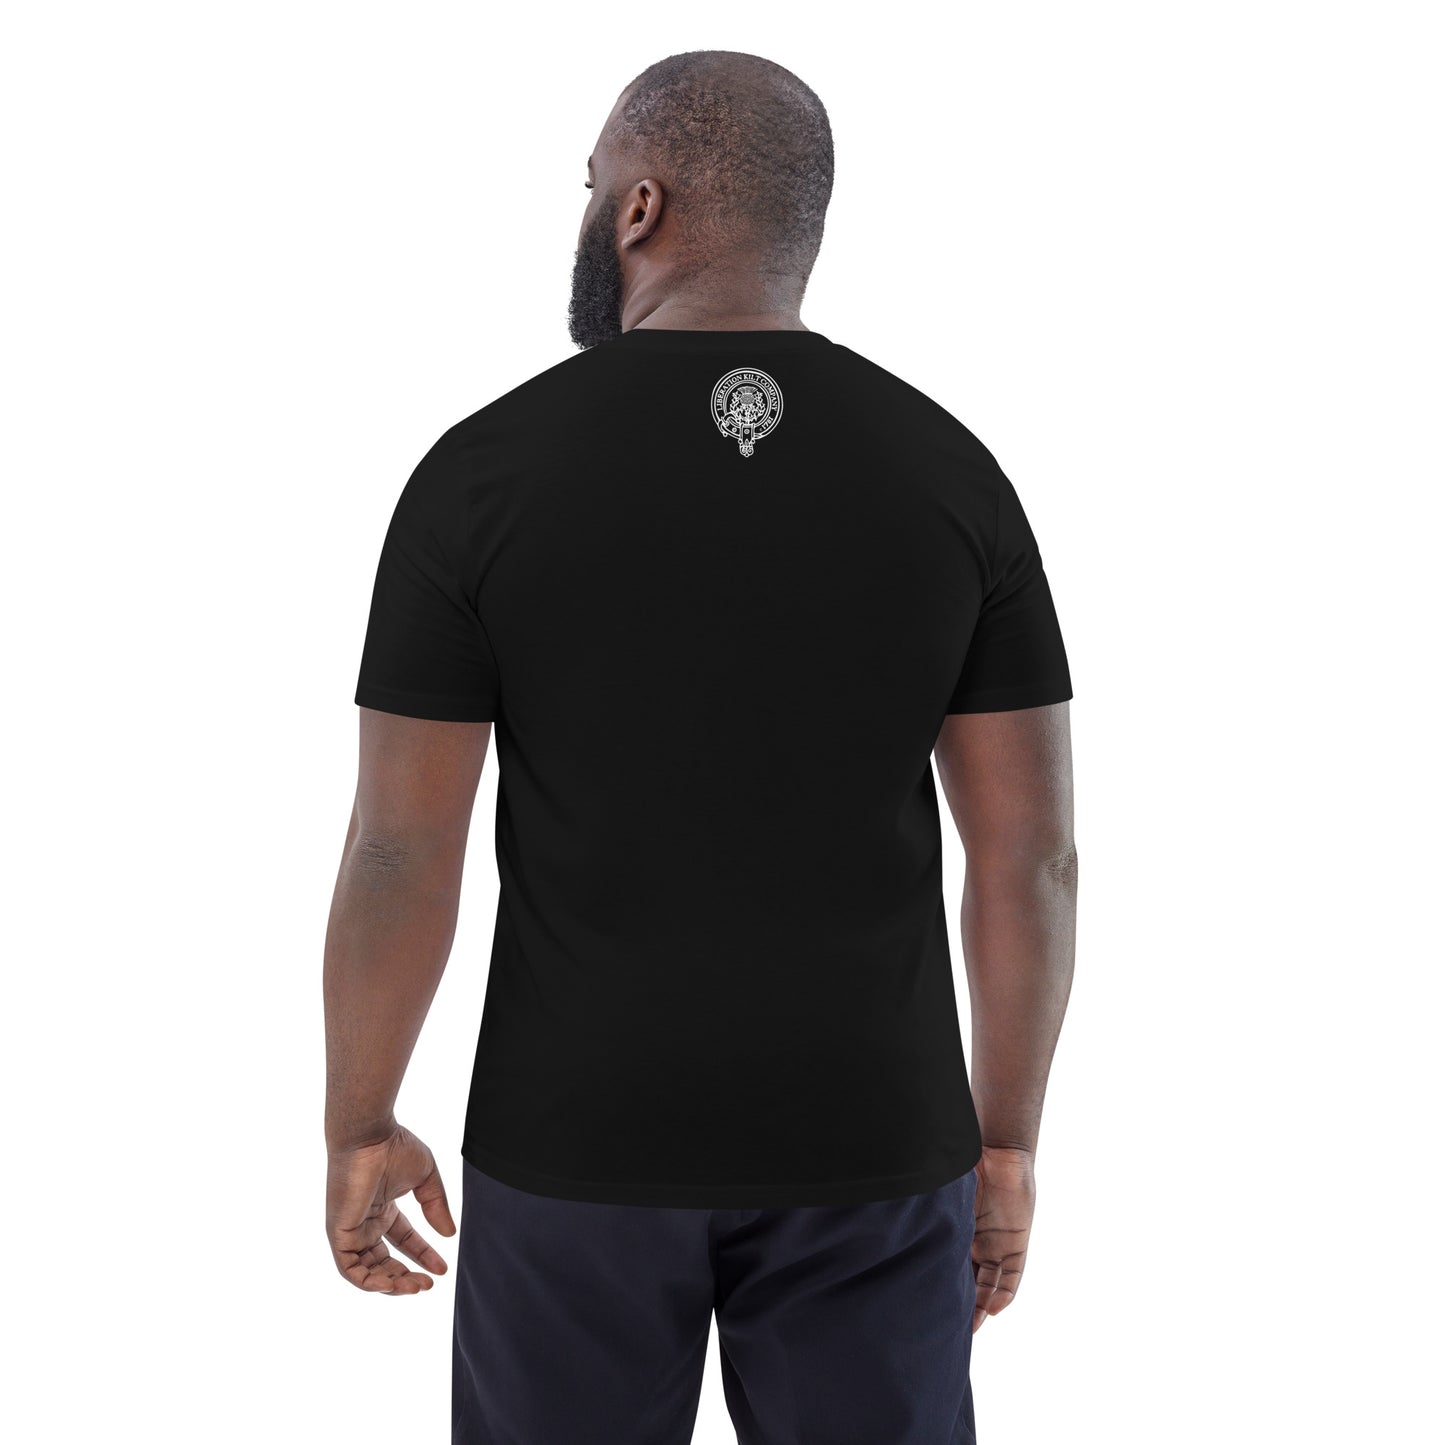 PIPEBONG HIT Black Unisex T-Shirt B/W Print